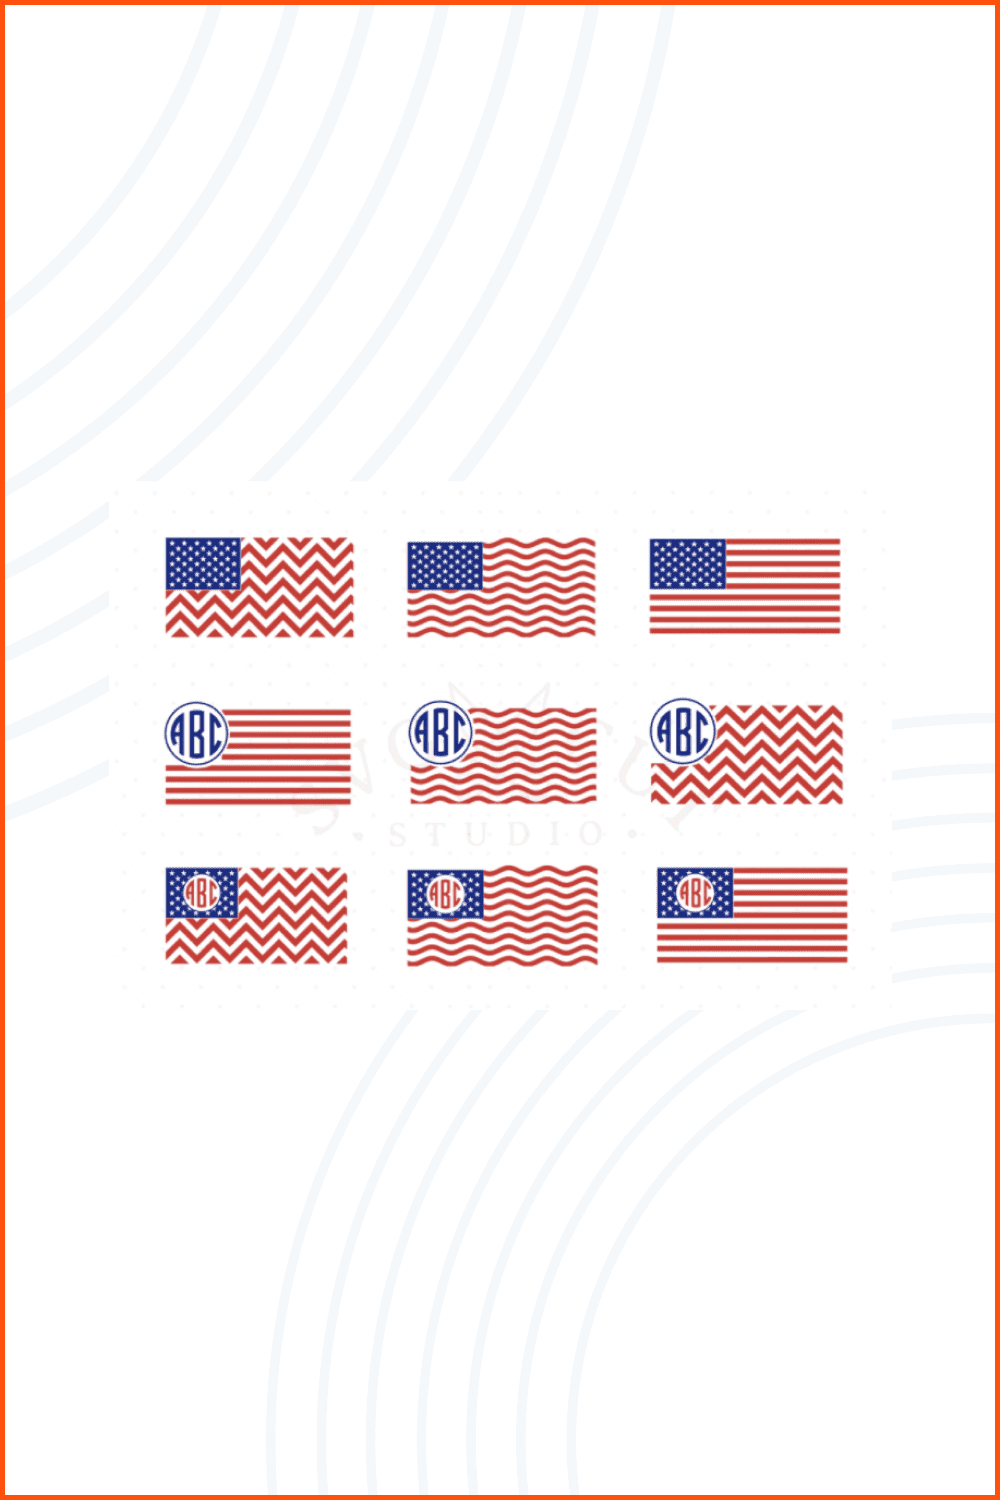 American Flag Monogram.